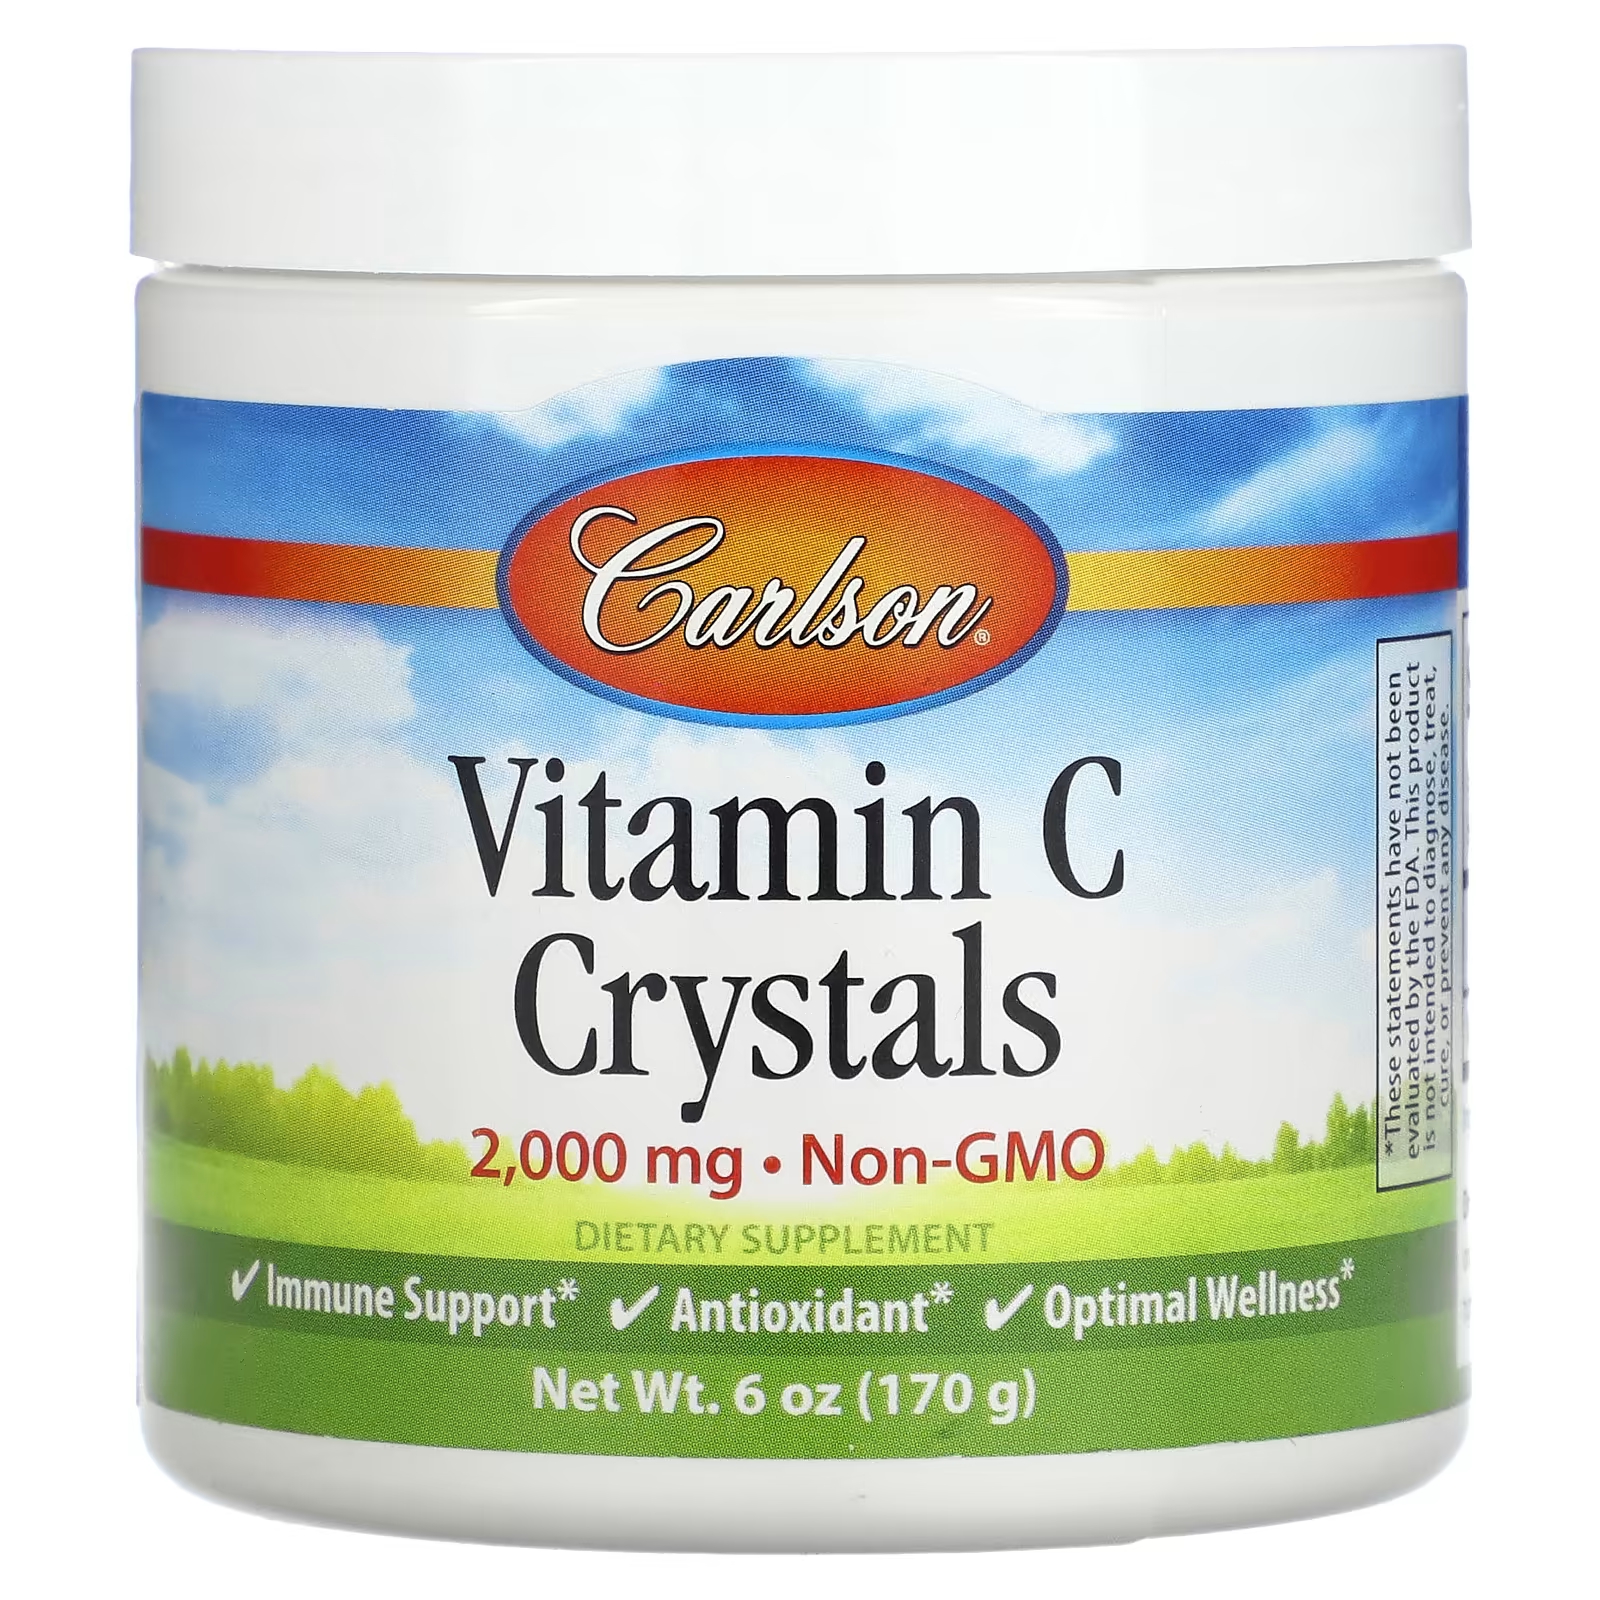 Кристаллы витамина С Carlson 2000 мг, 170 г carlson кристаллы витамина c 2000 мг 170 г 6 унций